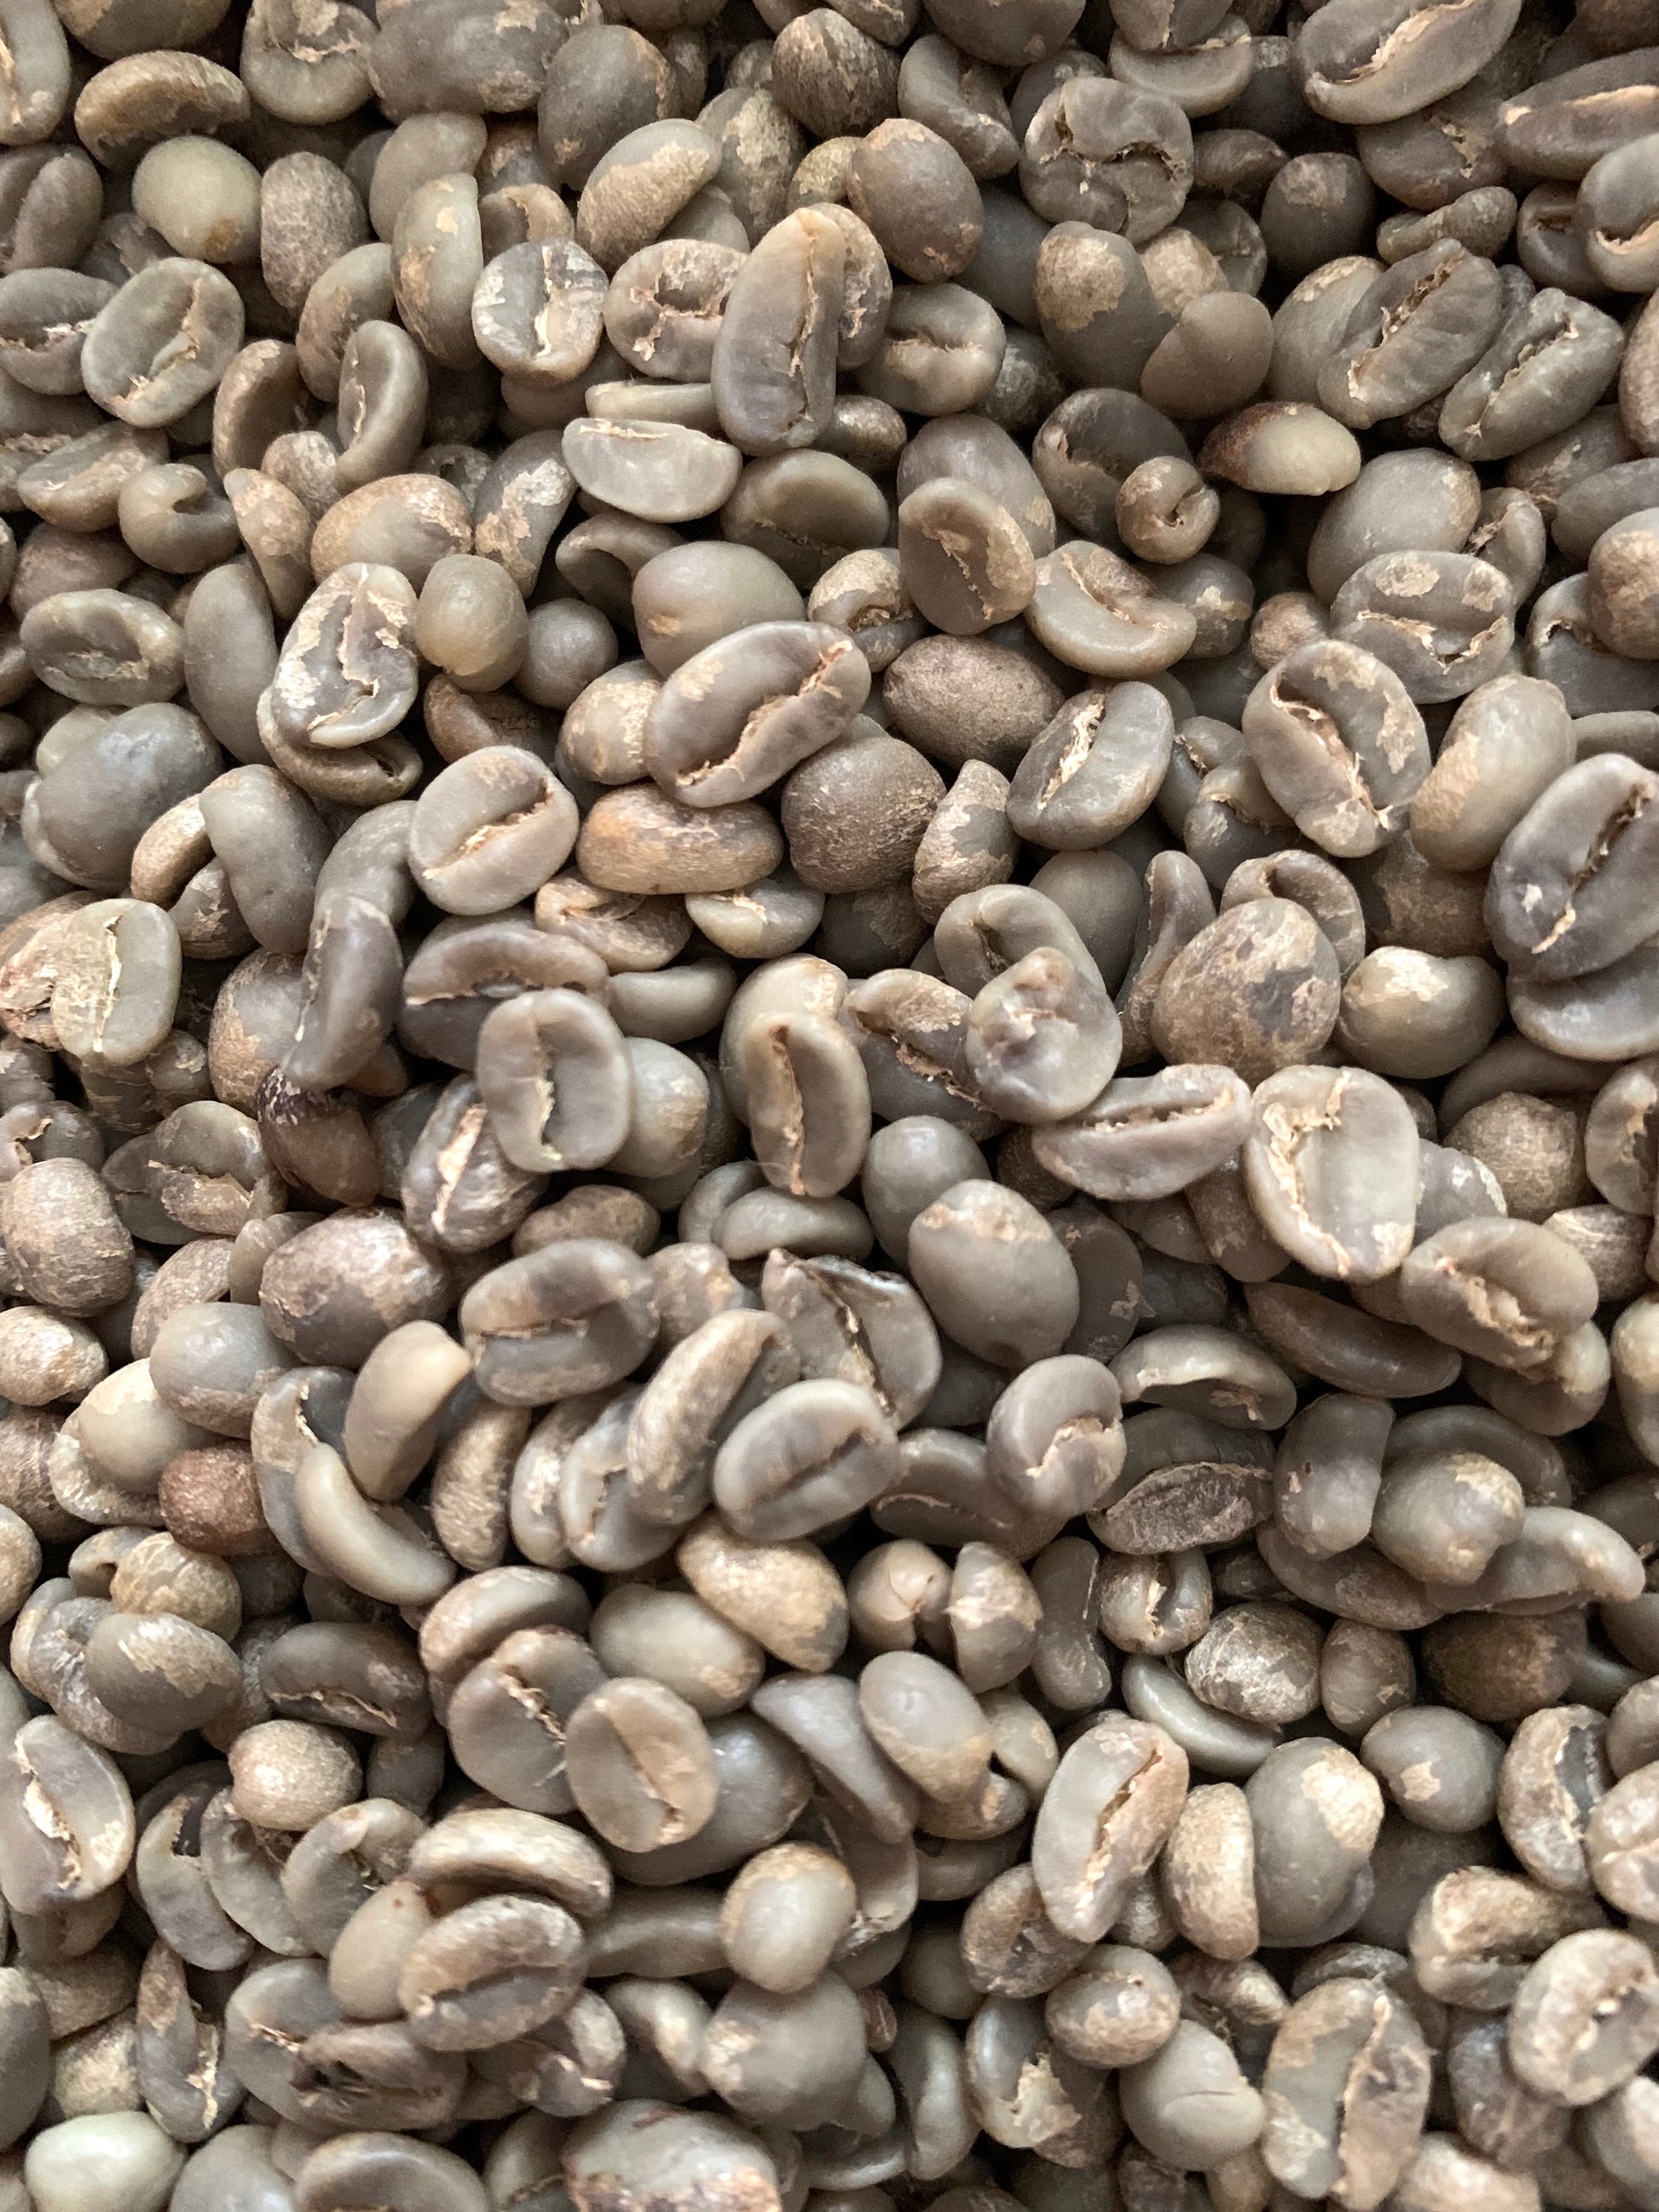 Marsellesa - Guatemala Green Coffee Specialty Grade- 5 lbs